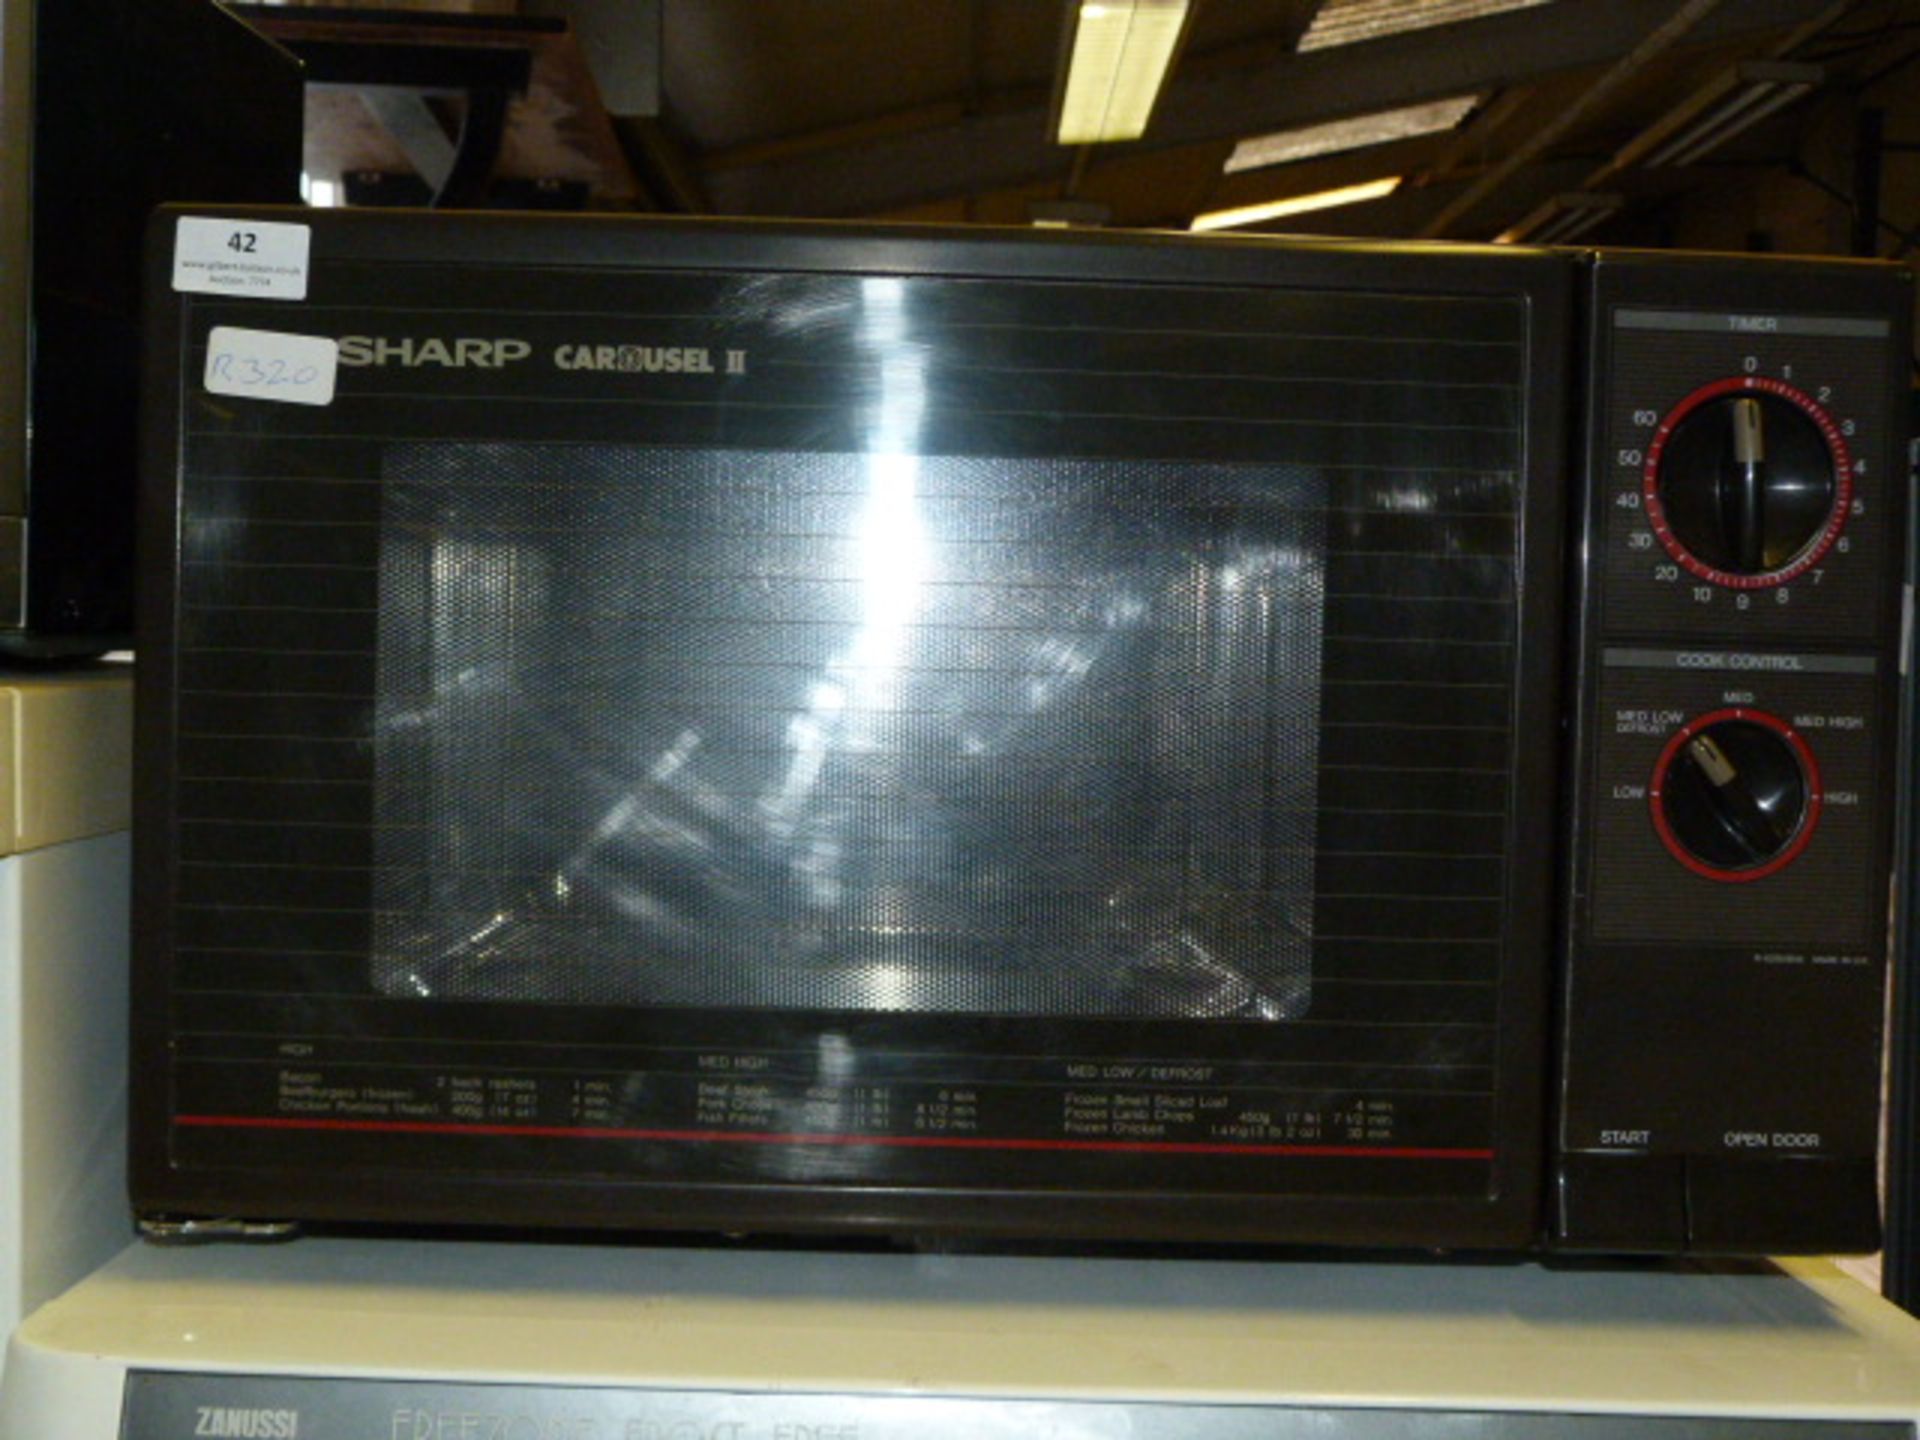 Sharp Carousel II Microwave Oven